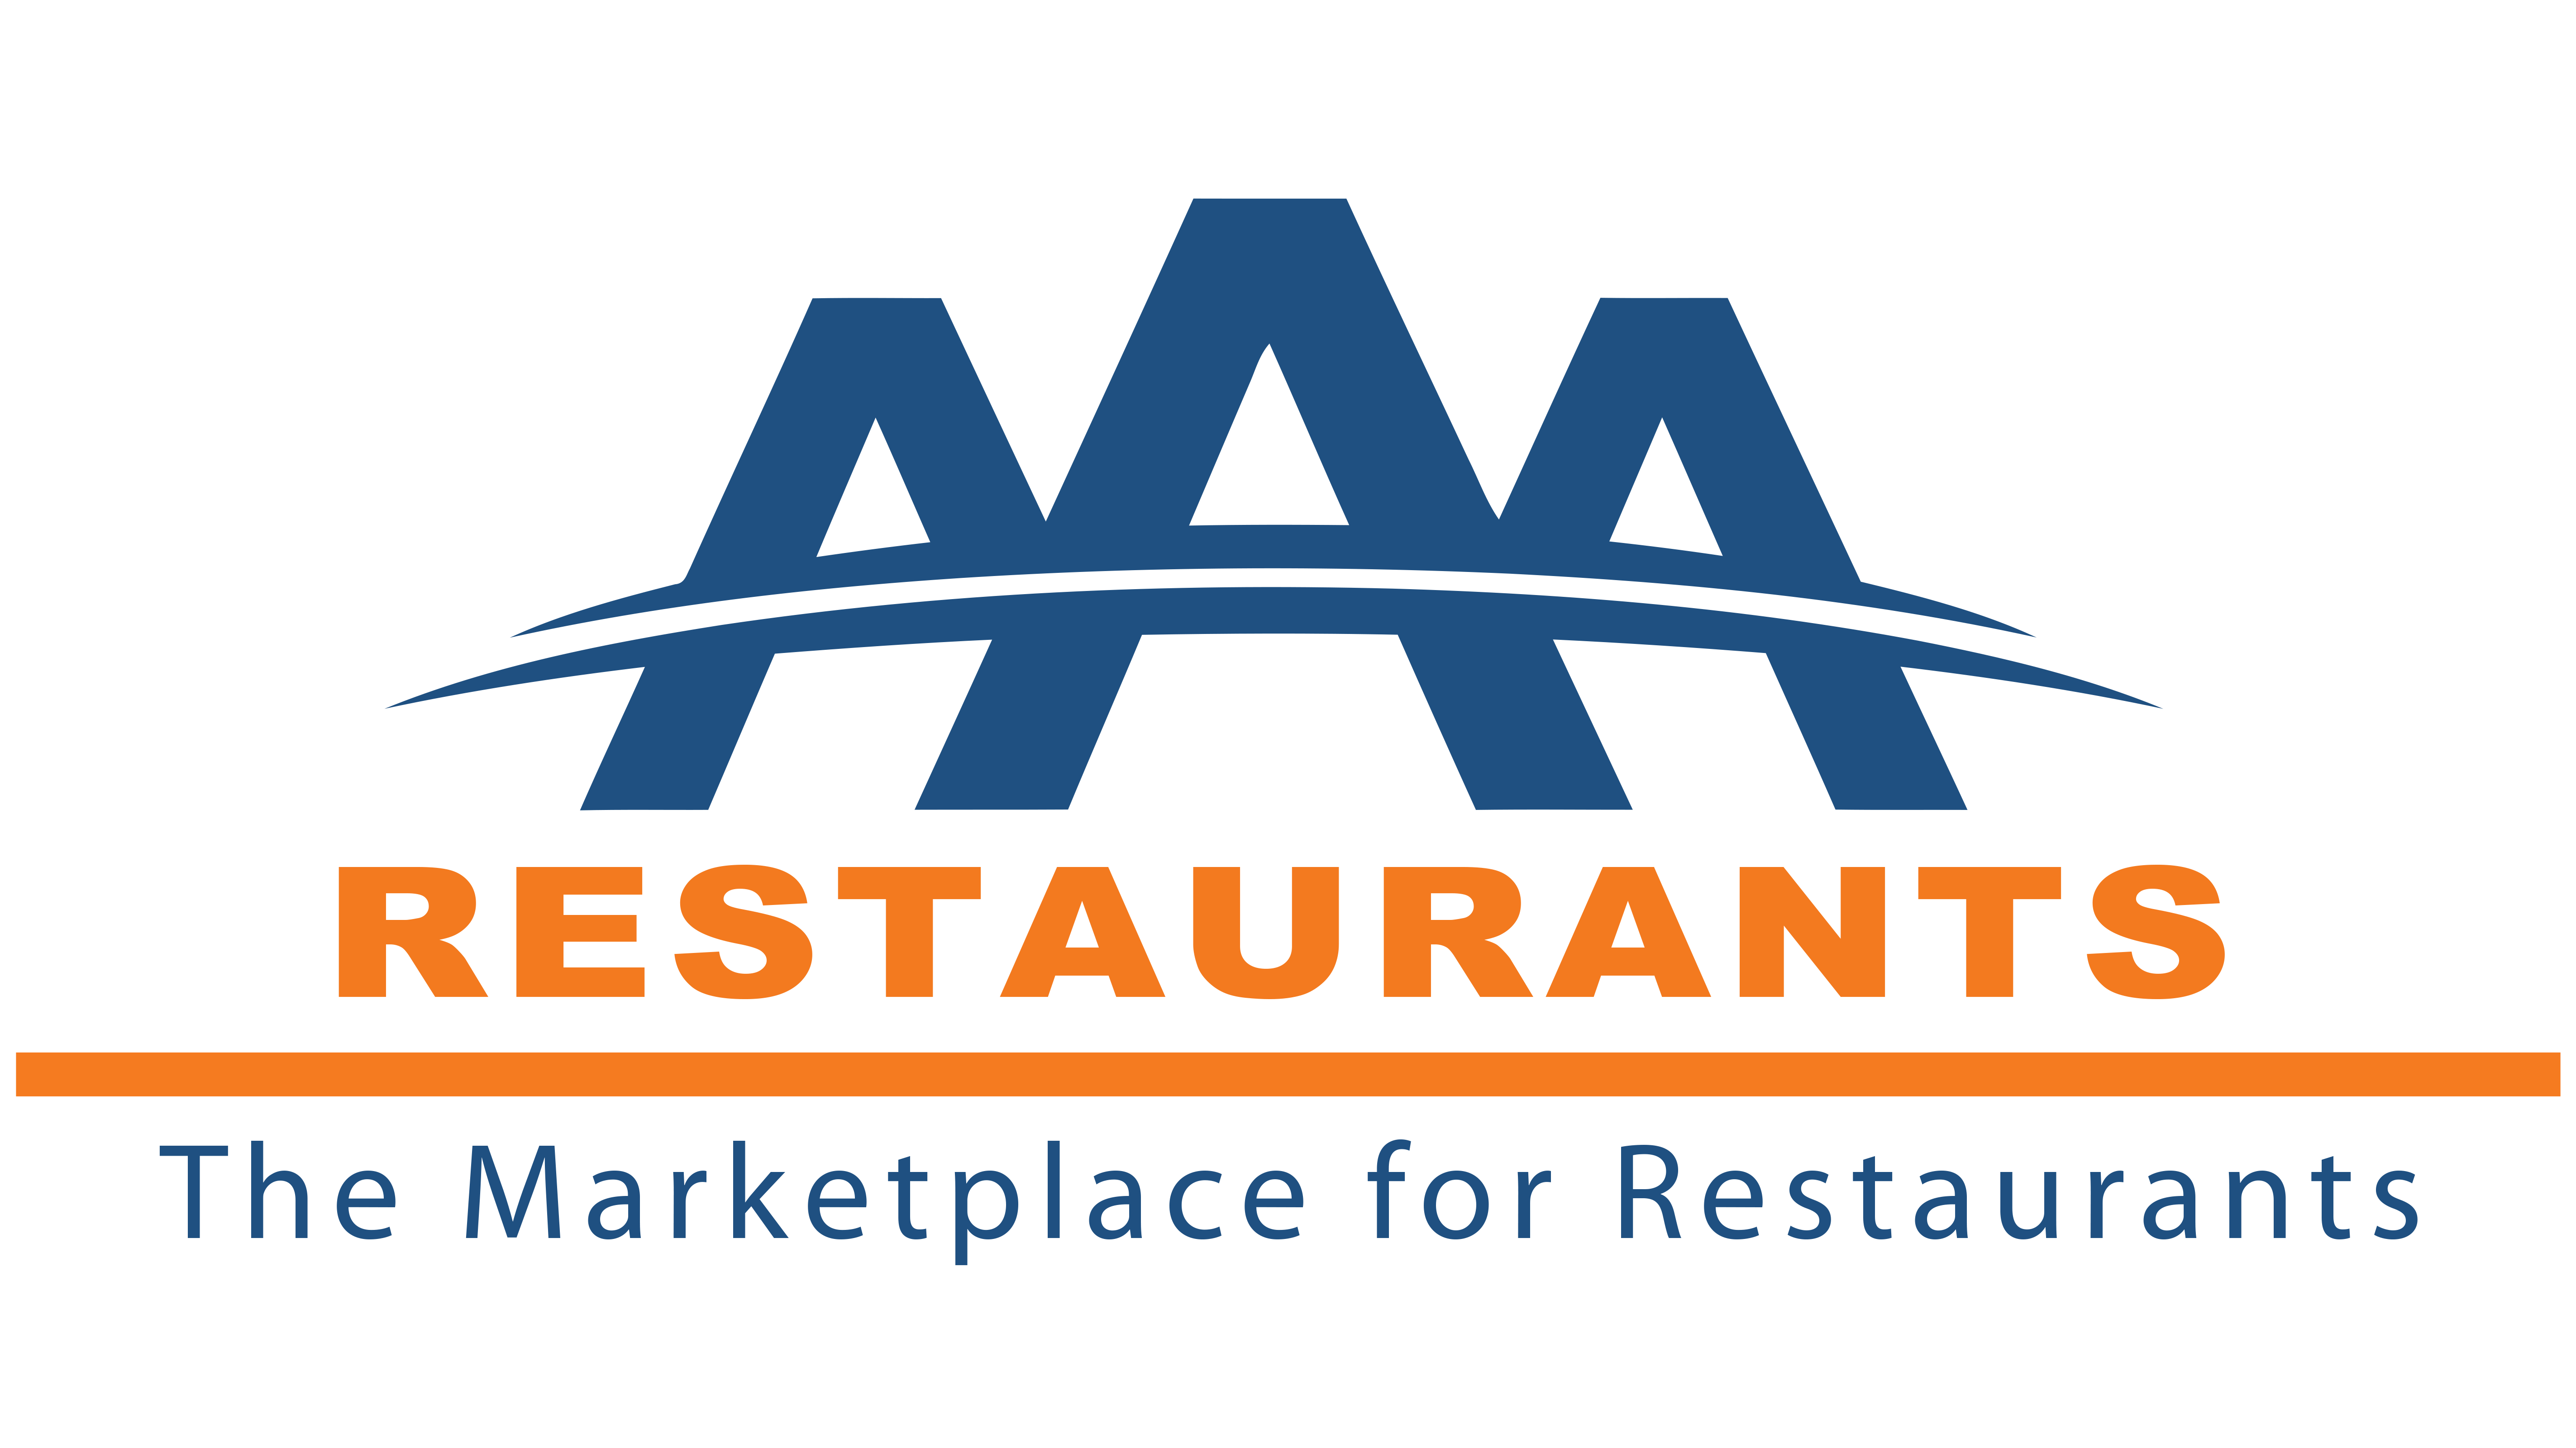 AAA Restaurants